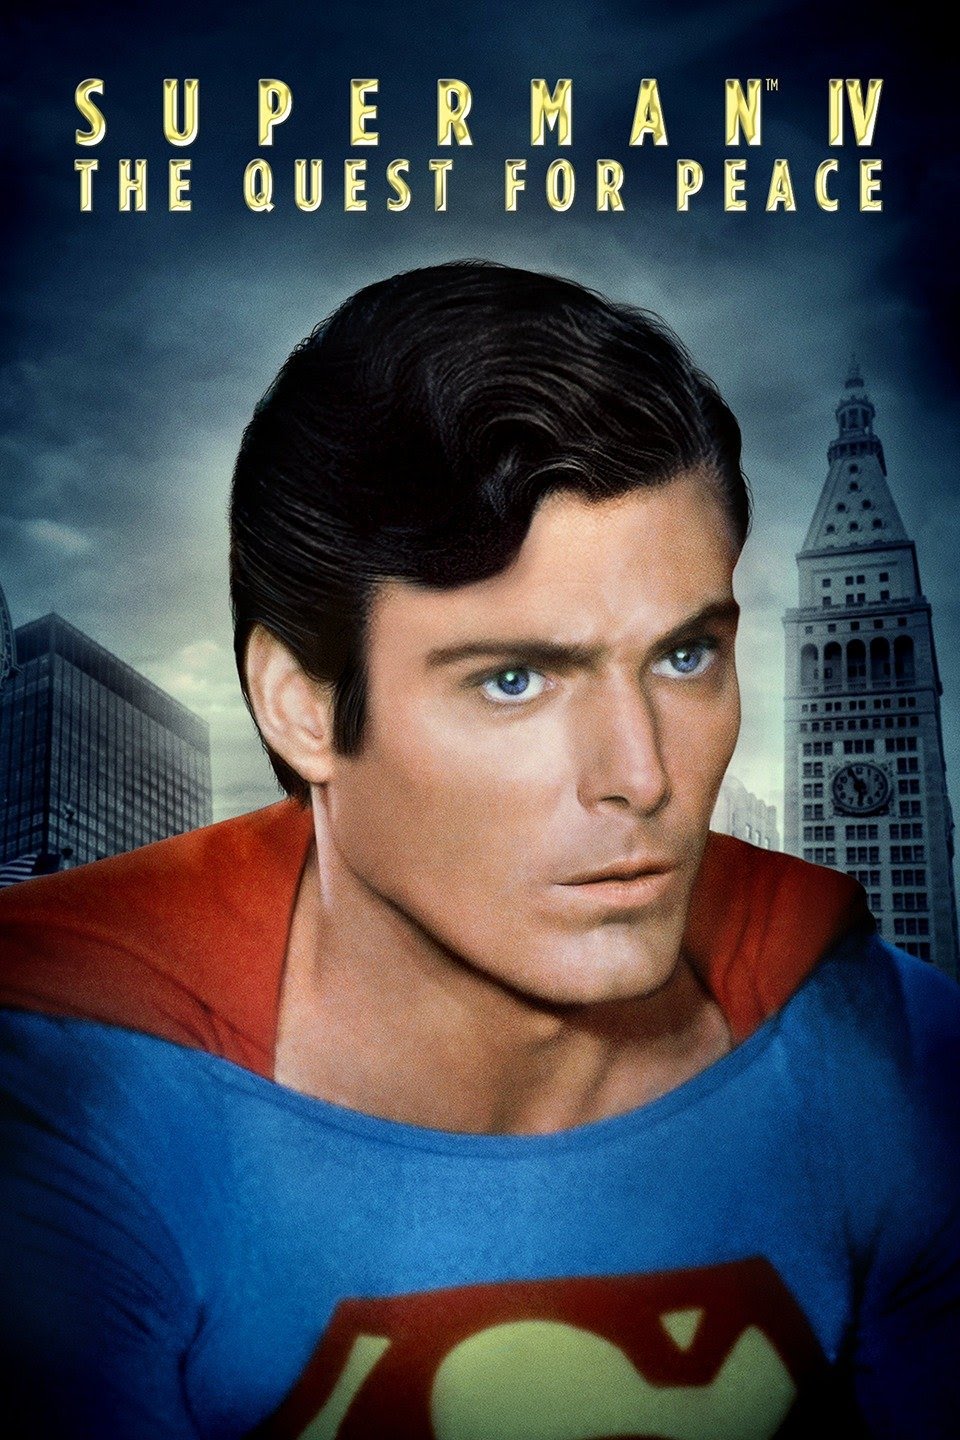 [MINI-HD] Superman IV: The Quest for Peace (1987) ซูเปอร์แมน IV: เดอะ เควสท์ ฟอร์ พีซ ภาค 4 [1080p] [พากย์ไทย 2.0 + เสียงอังกฤษ DTS] [บรรยายไทย + อังกฤษ] [เสียงไทย + ซับไทย] [DOSYAUPLOAD]